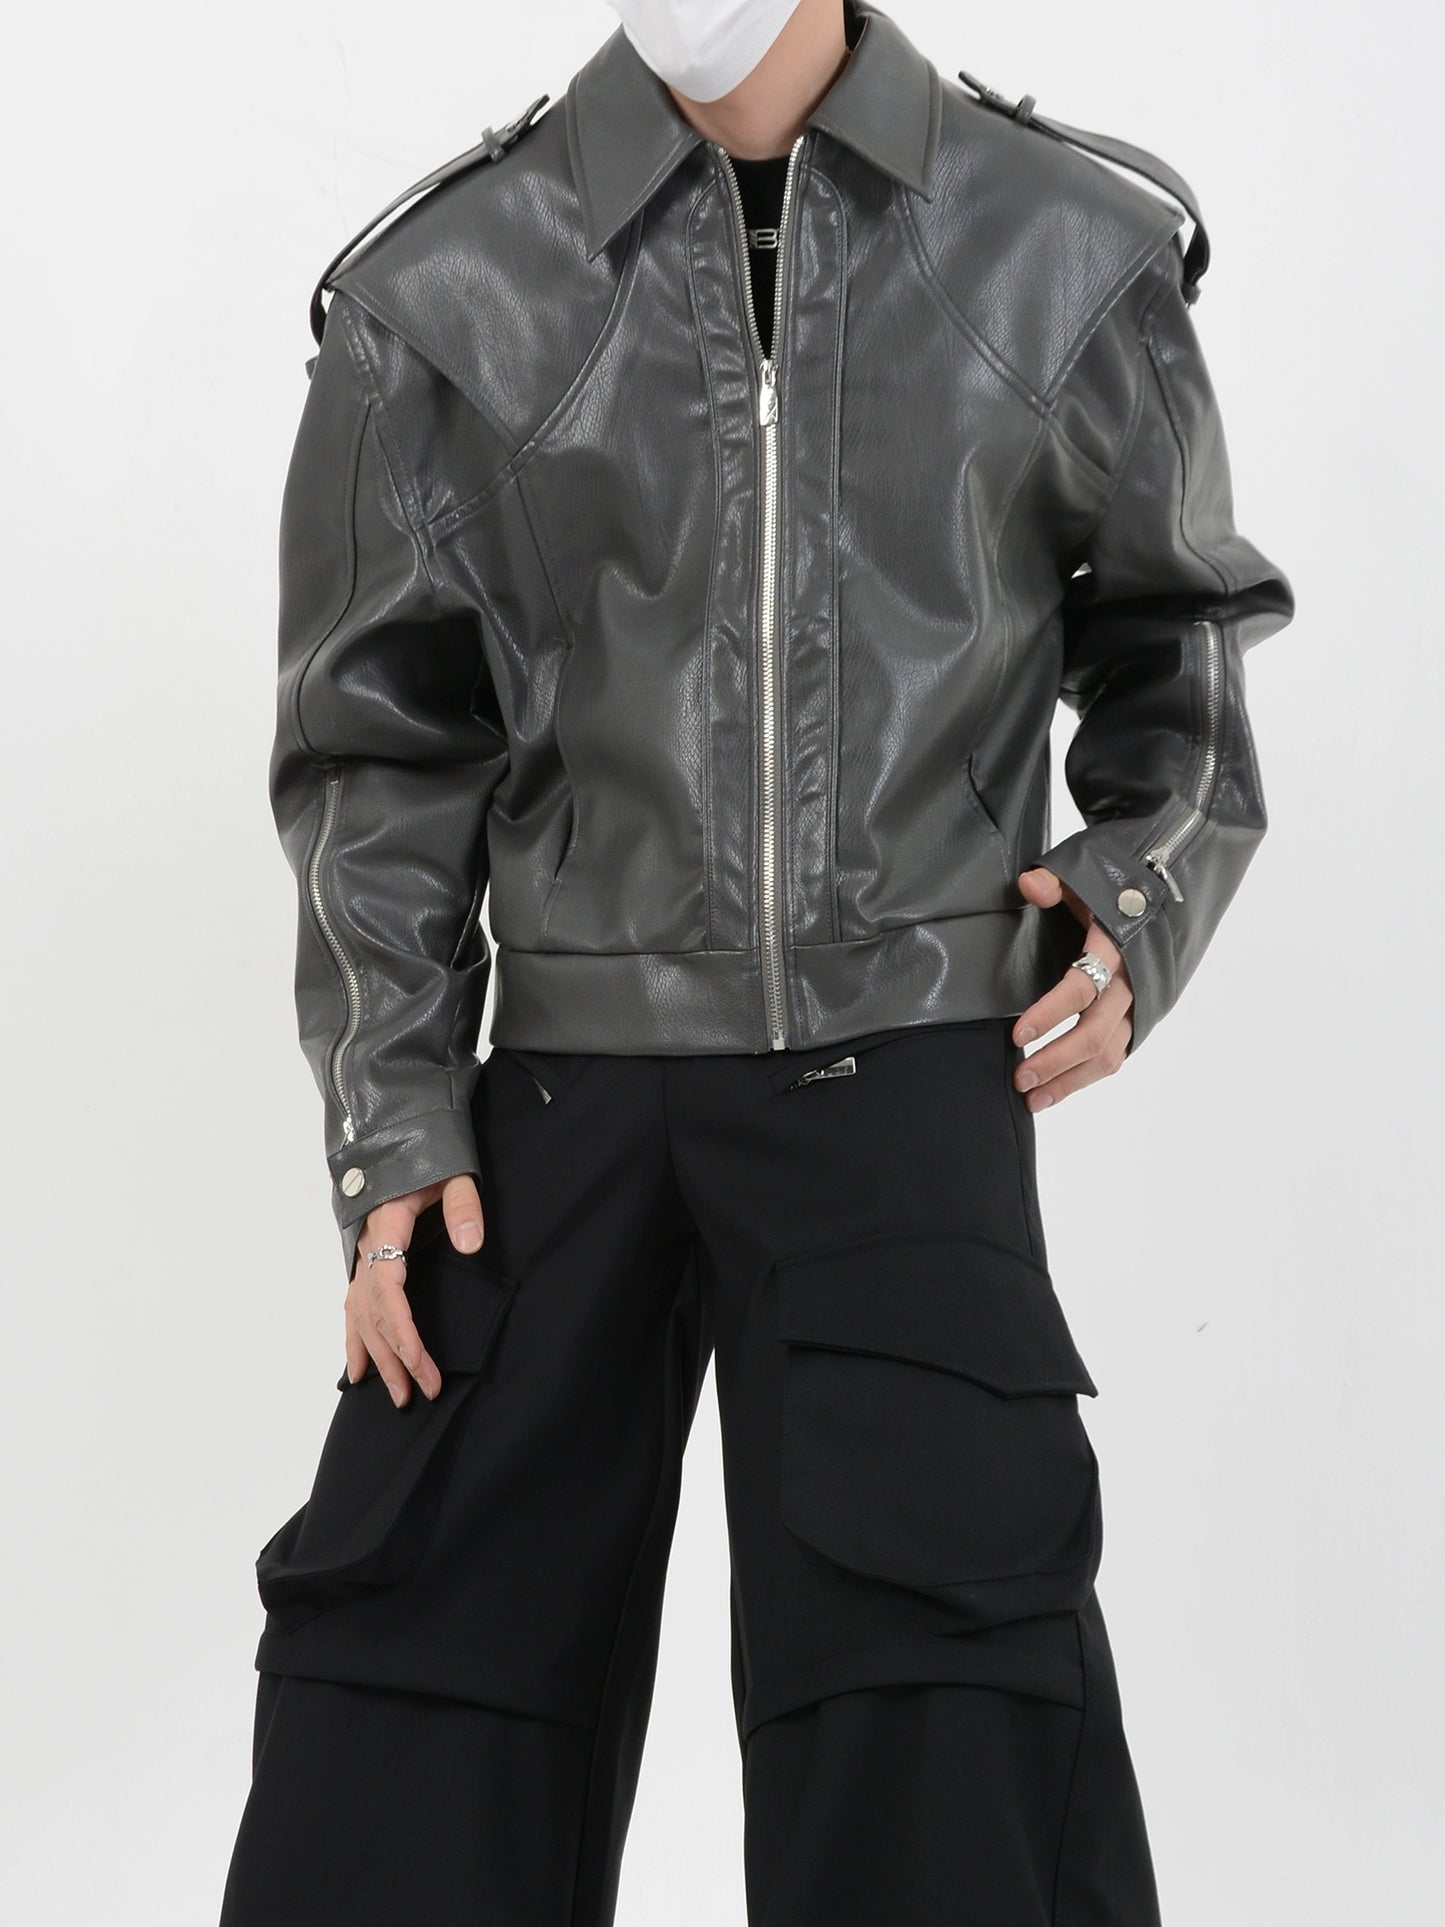 LUCE GARMENT niche deconstructed padded shoulders pu leather jacket men's design sense loose casual retro jacket trend